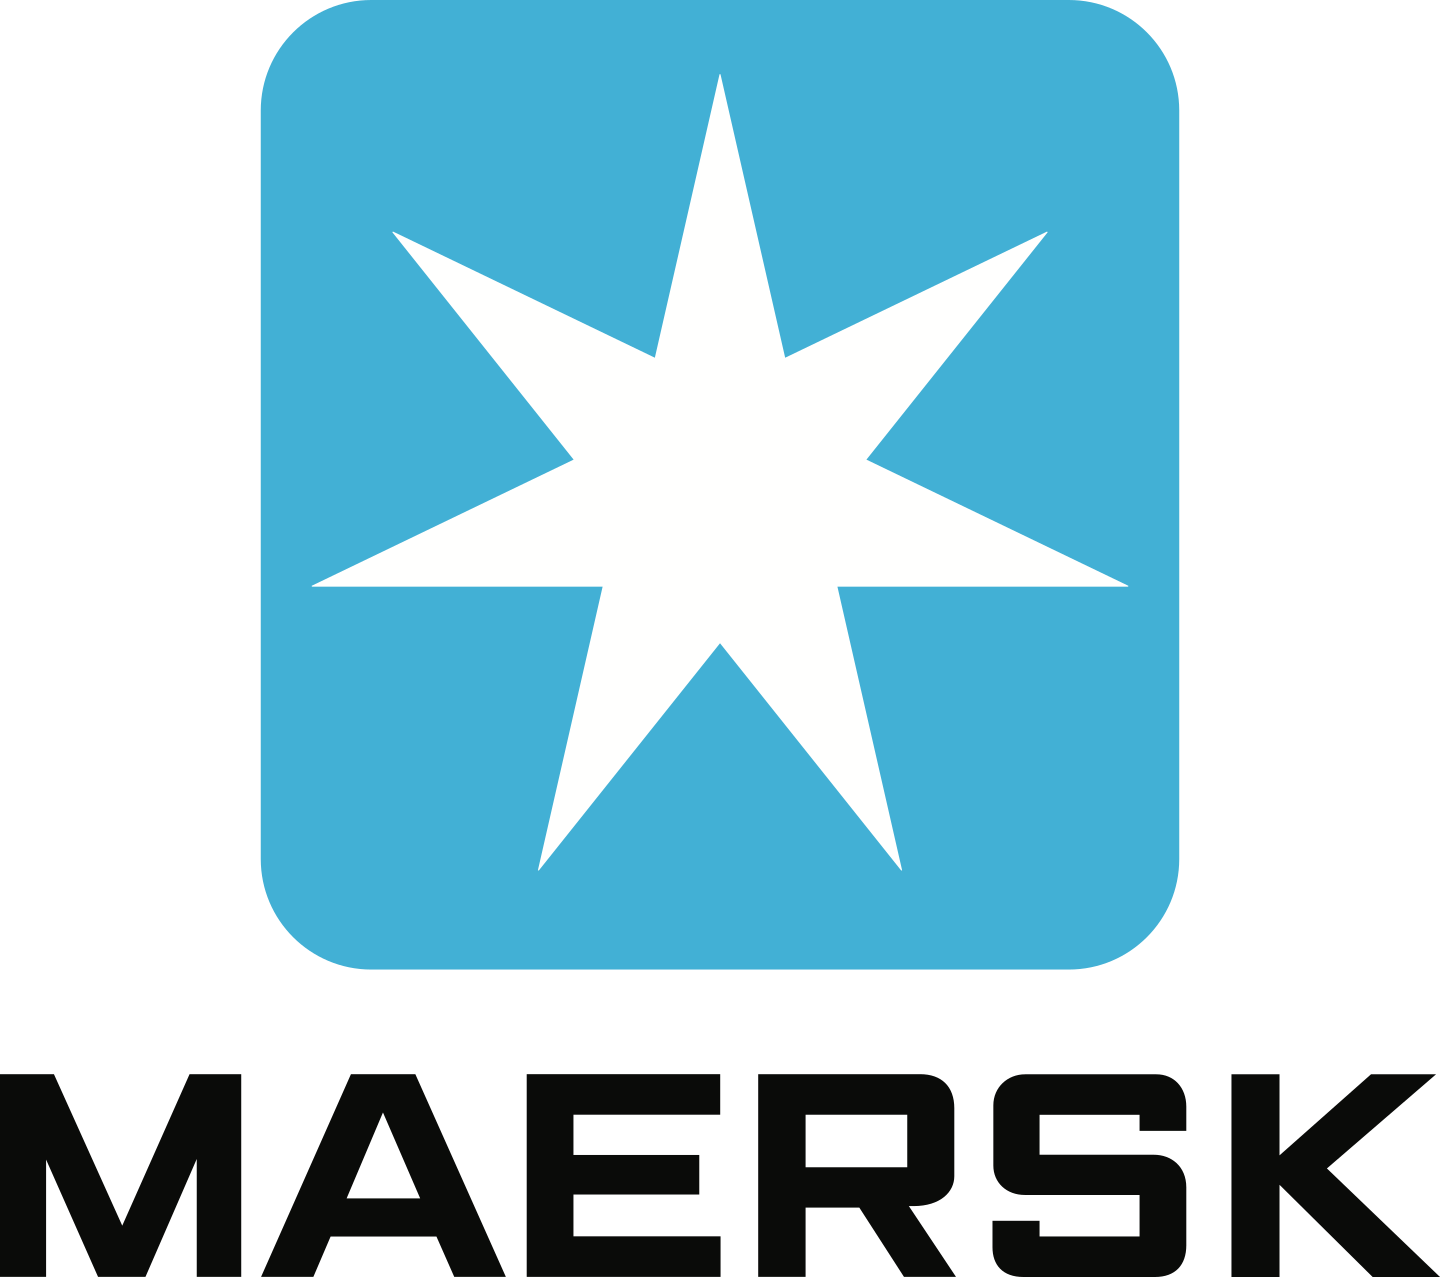 maersk logo 3 - Maersk Logo